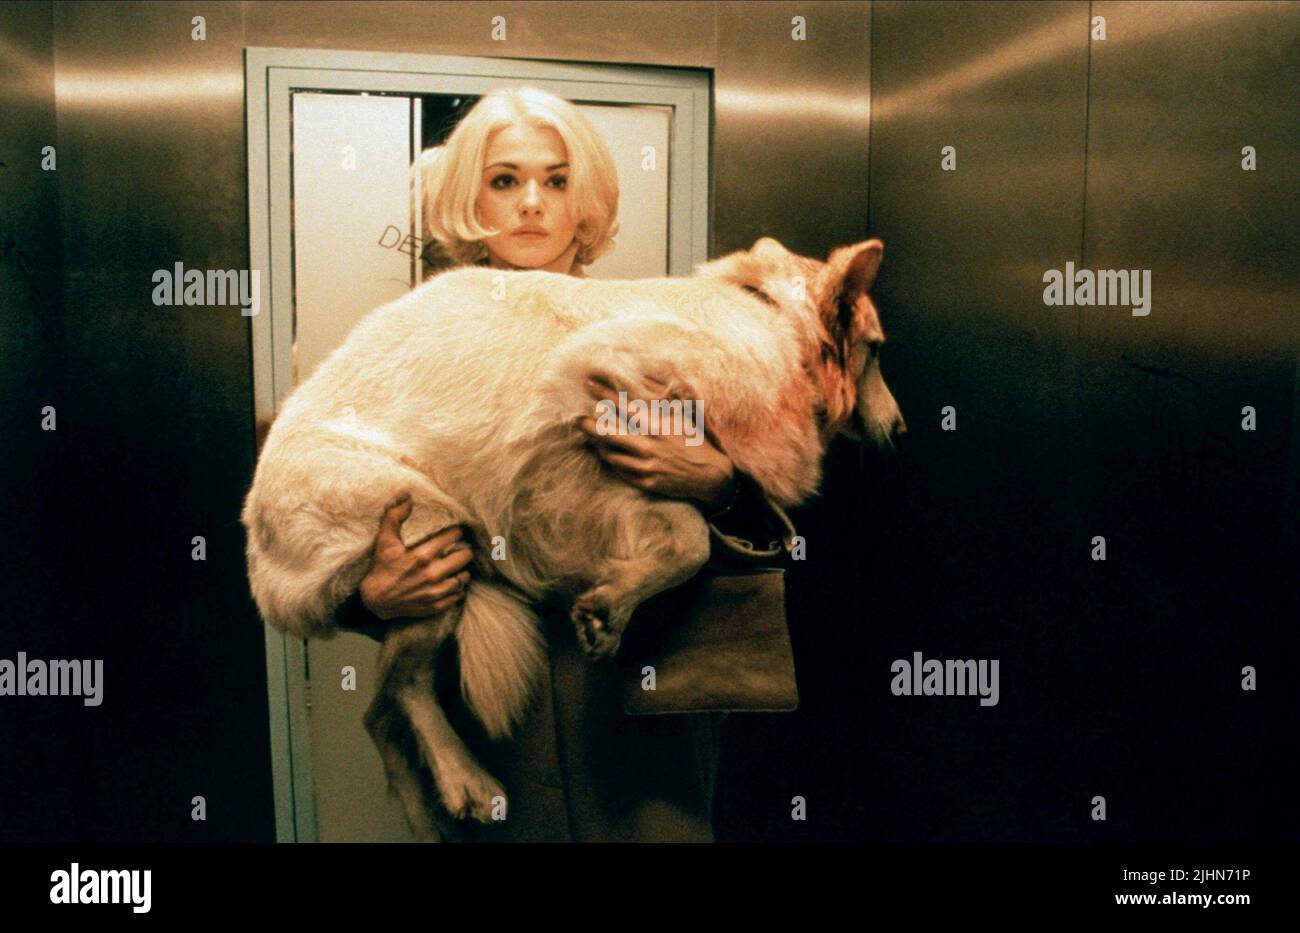 RACHEL WEISZ HOLDING cane, bellissime creature, 2000 Foto Stock